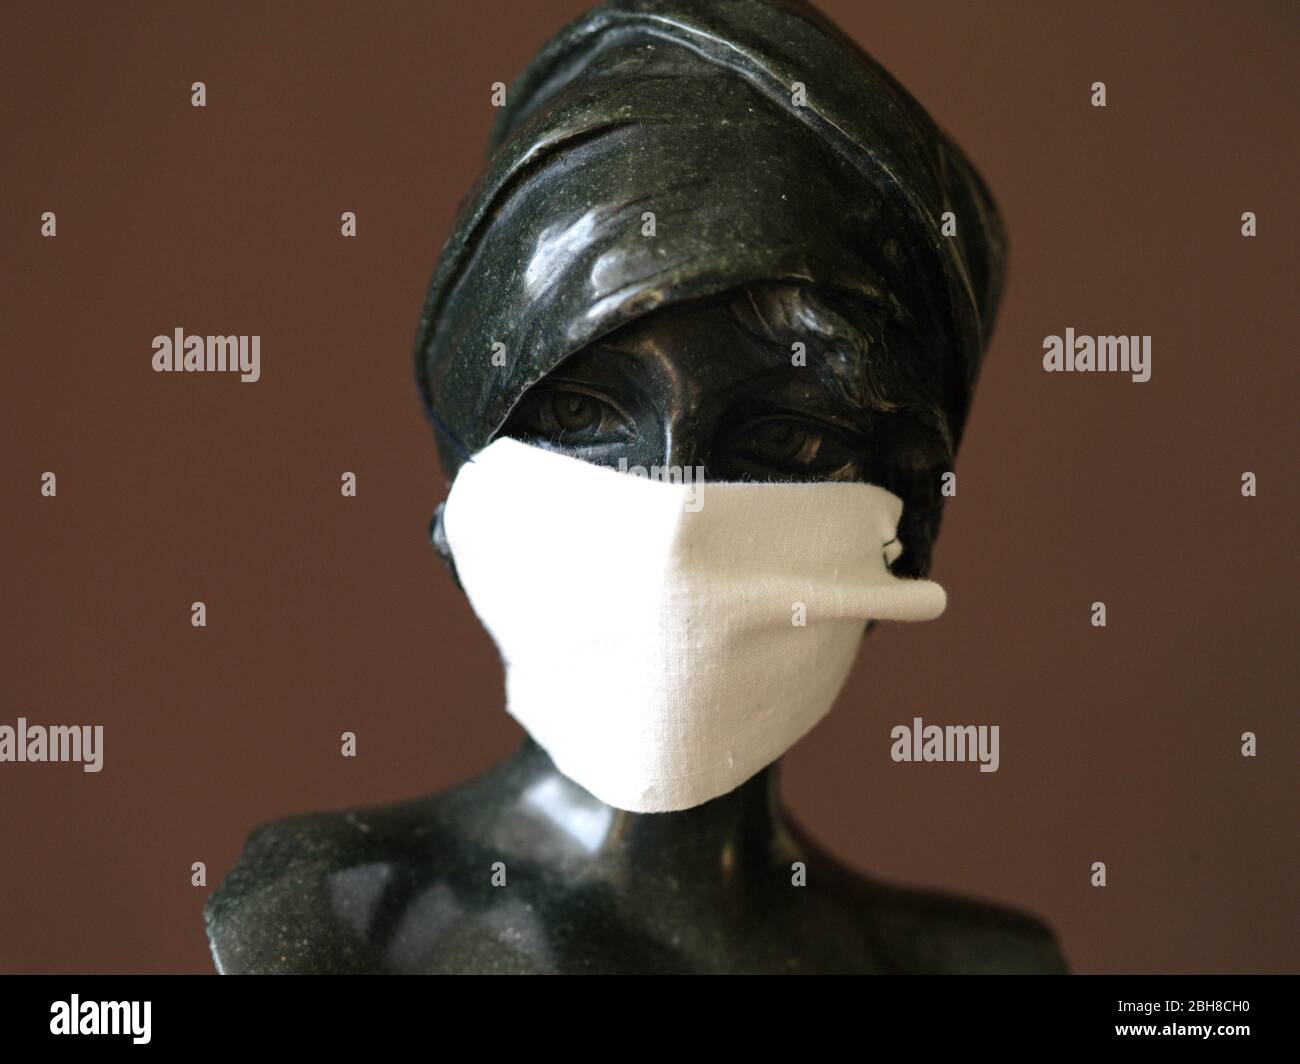 Bust Moe Moebella face mask Covid 19 Corona virus pandemic allegory / metaphor PPE mask Stock Photo